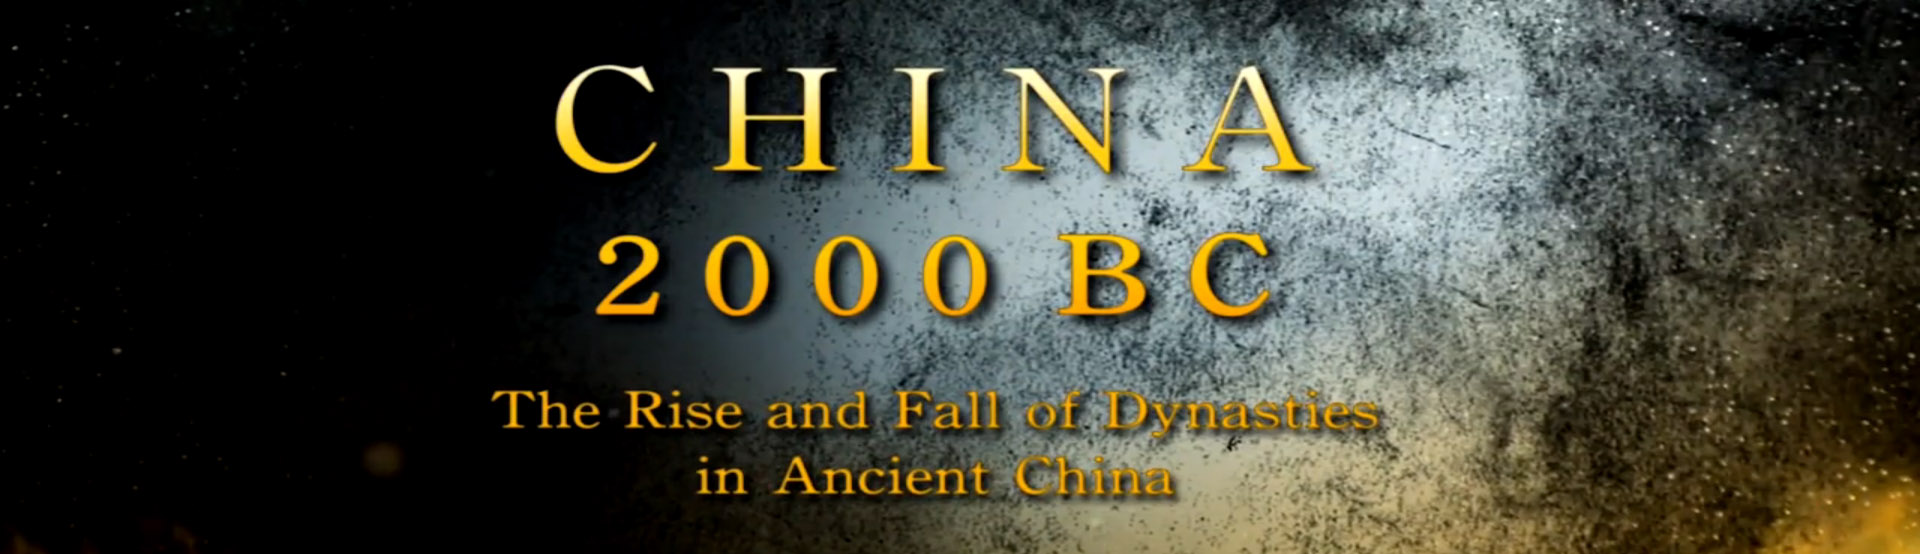 ancient china topics